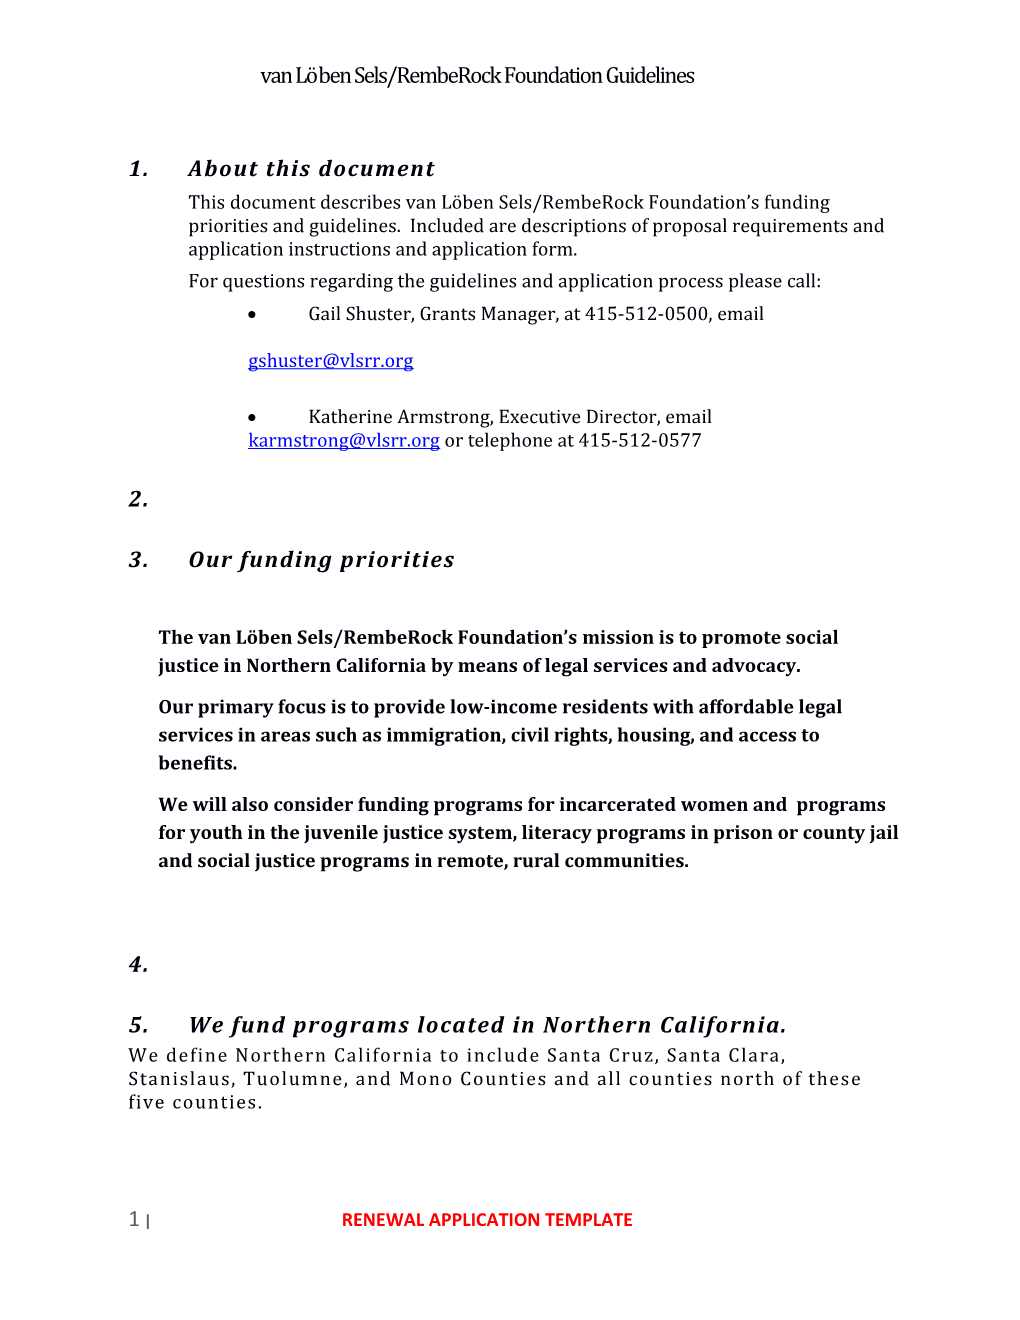 The Vanlobensels/Remberock Foundation Proposal Guidelines